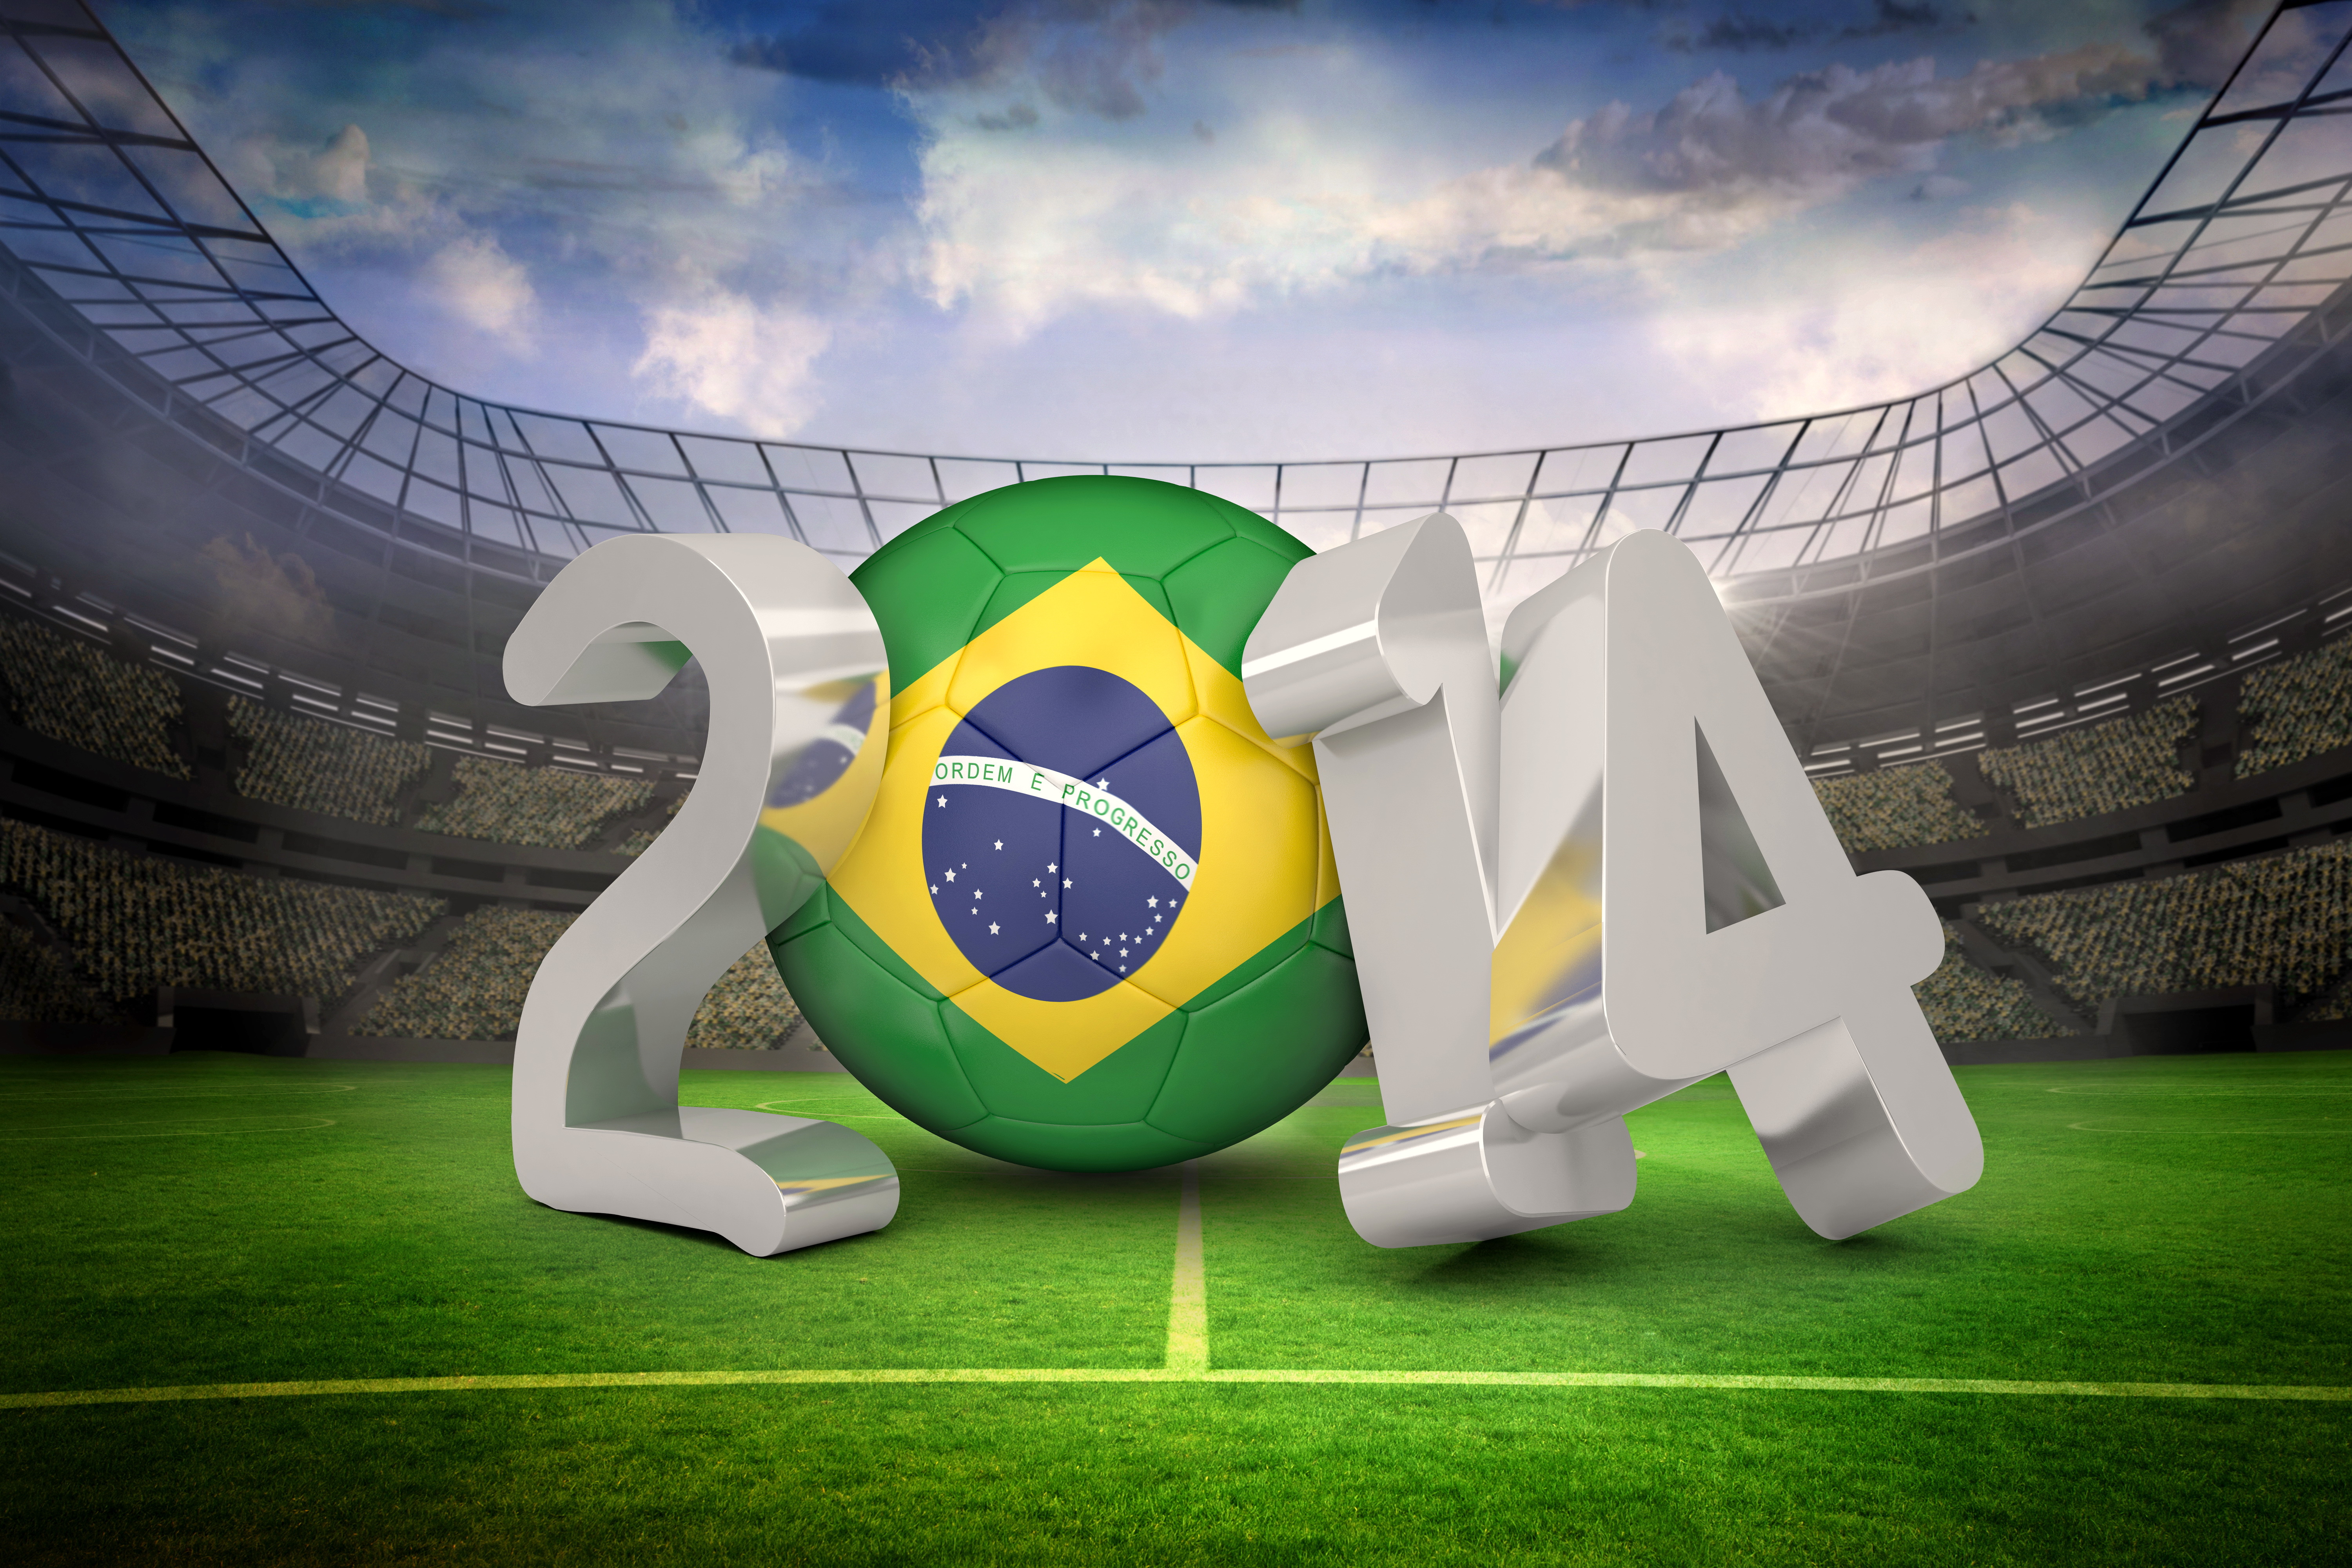 Great final. ФИФА 2014 Бразилия. Бразилия 2014. ЧМ В Бразилии 2014.